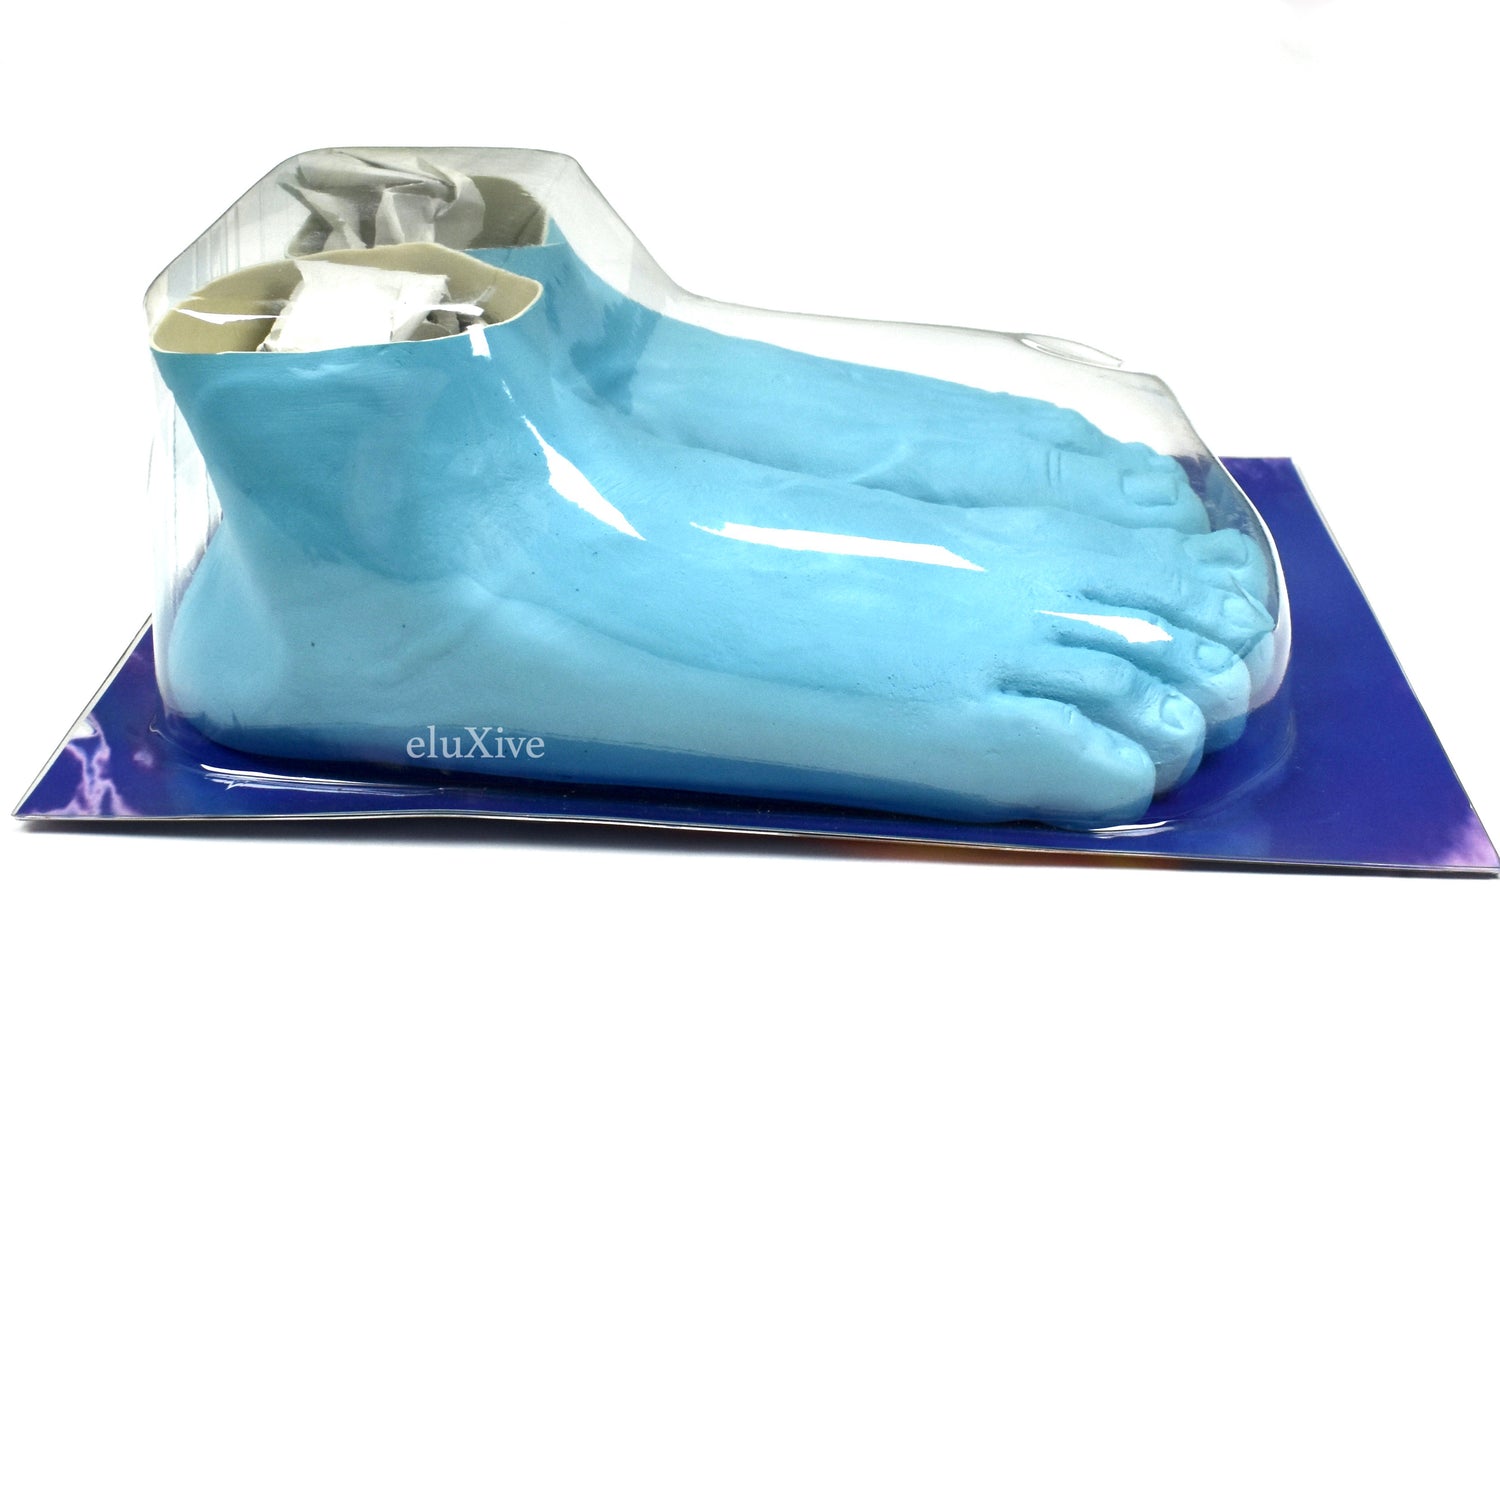 Imran Potato Caveman Slippers Blue Smurf(One Size Fits All)